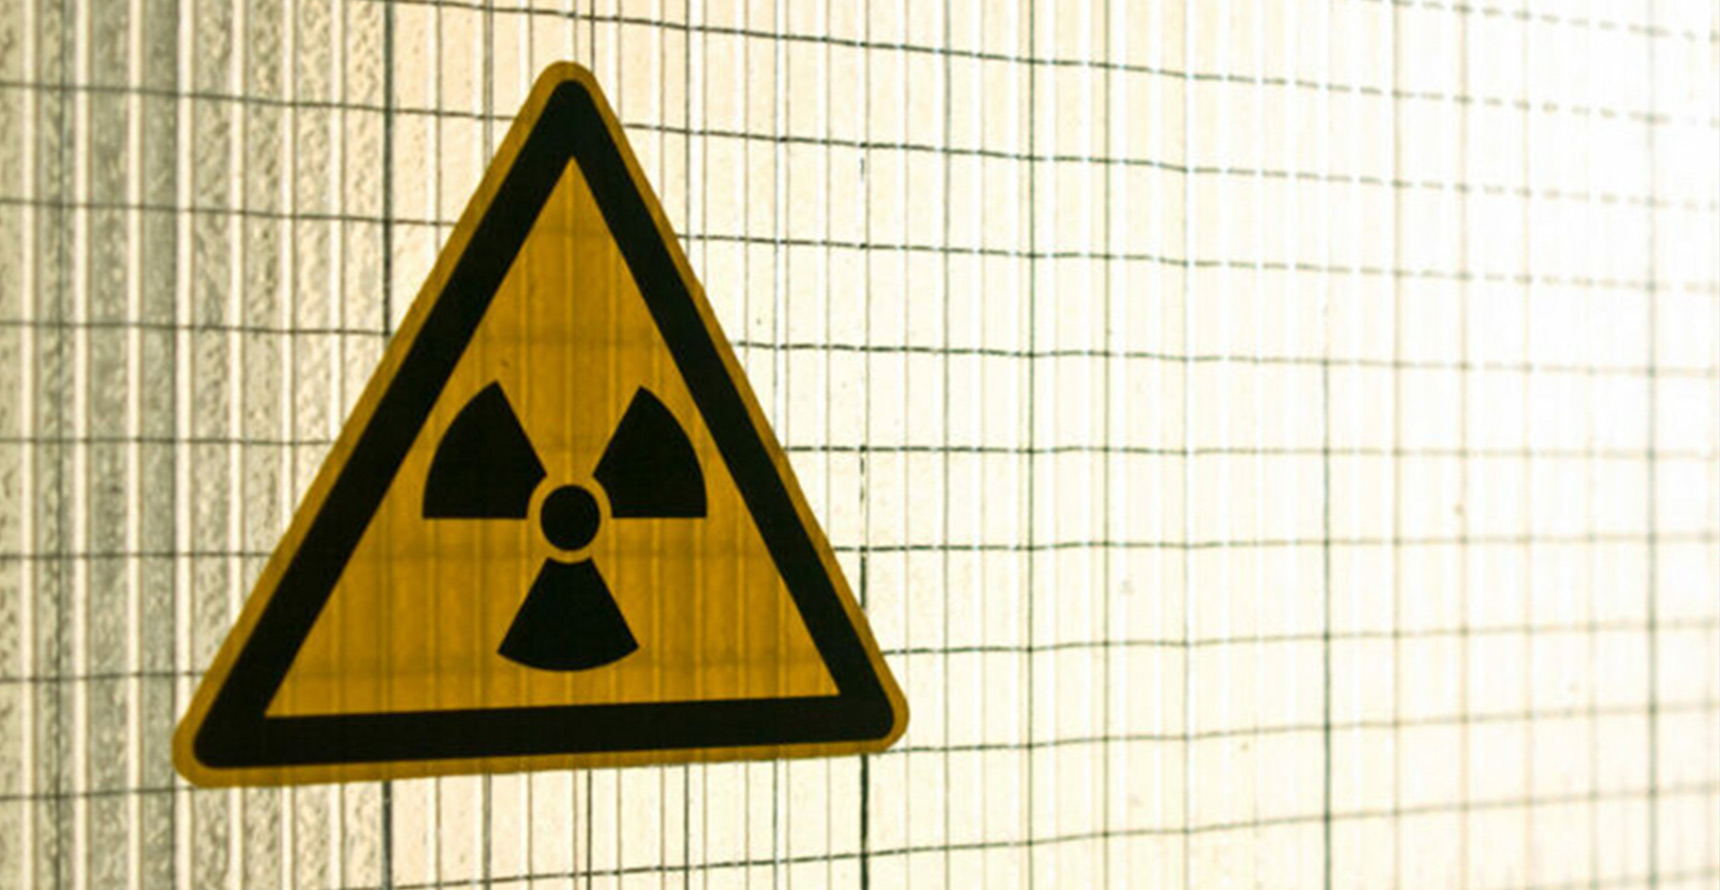 Nuclear signage